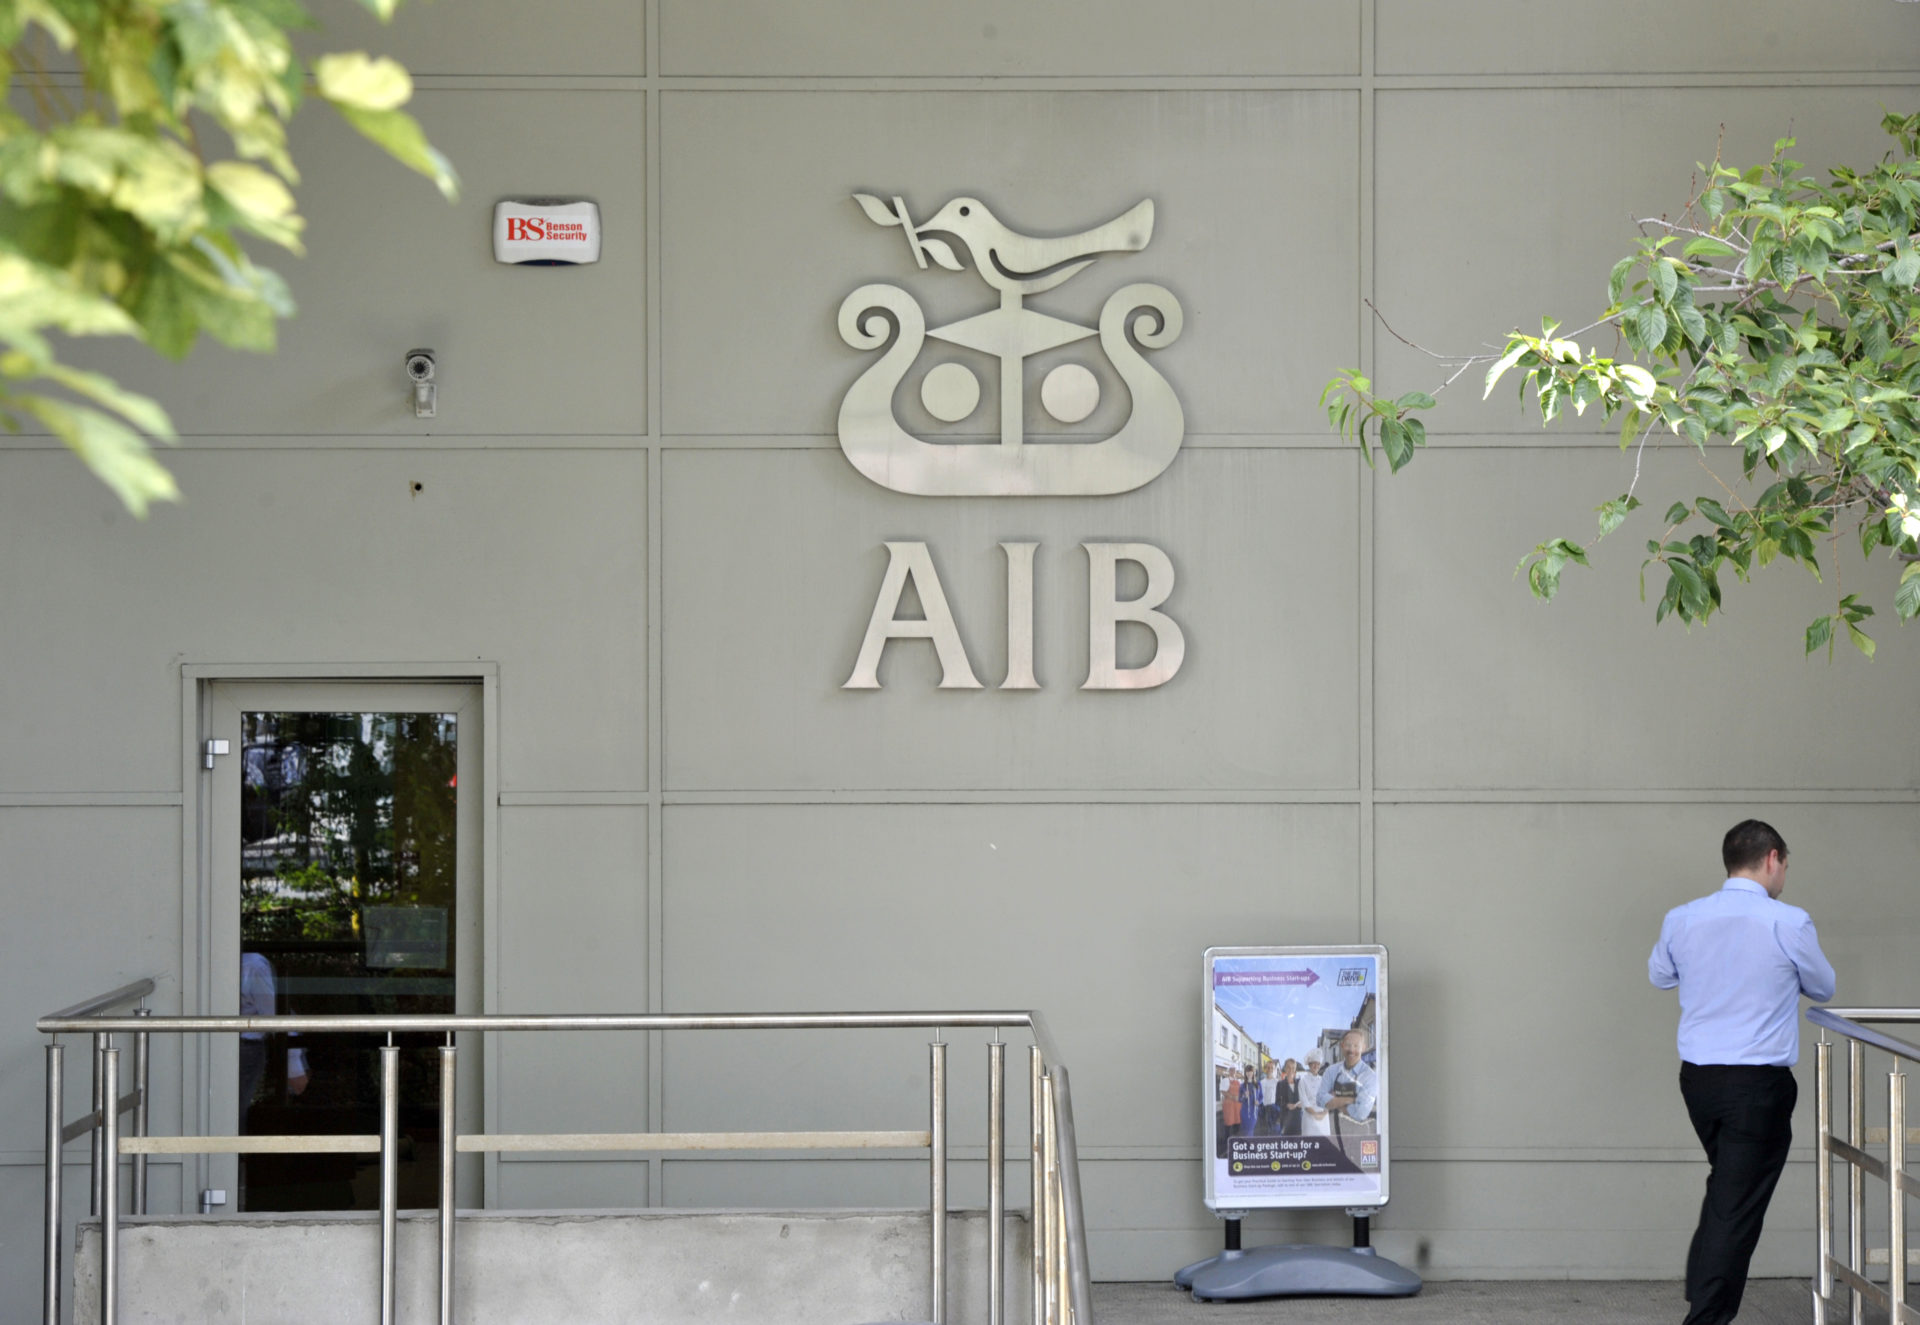 An AIB branch is seen in July 2012.